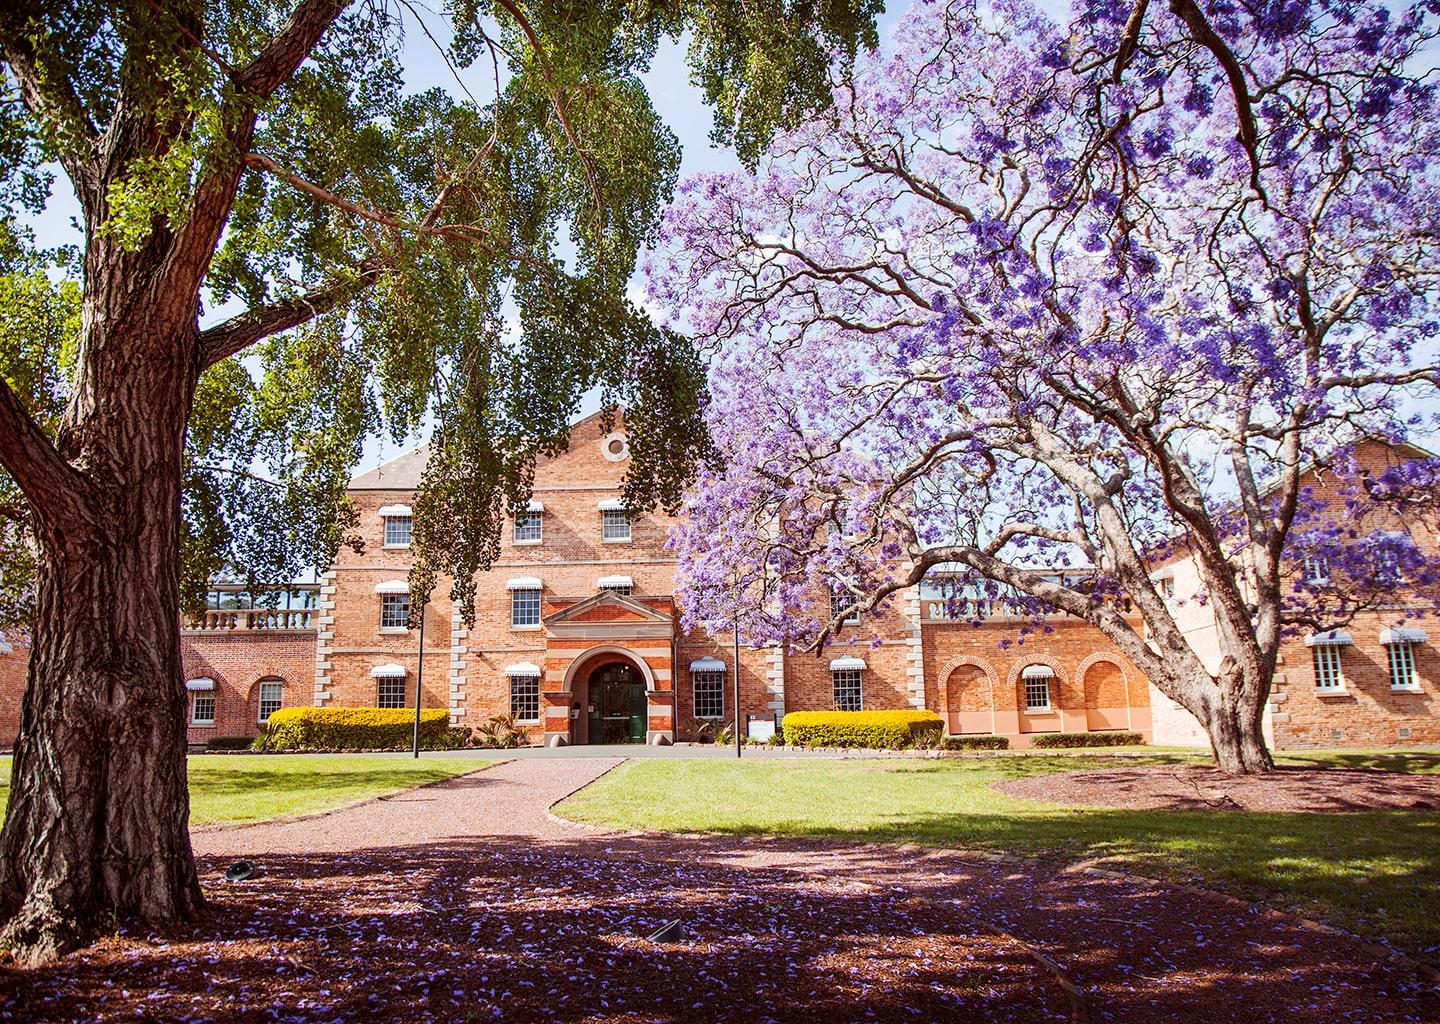 At Western Sydney University